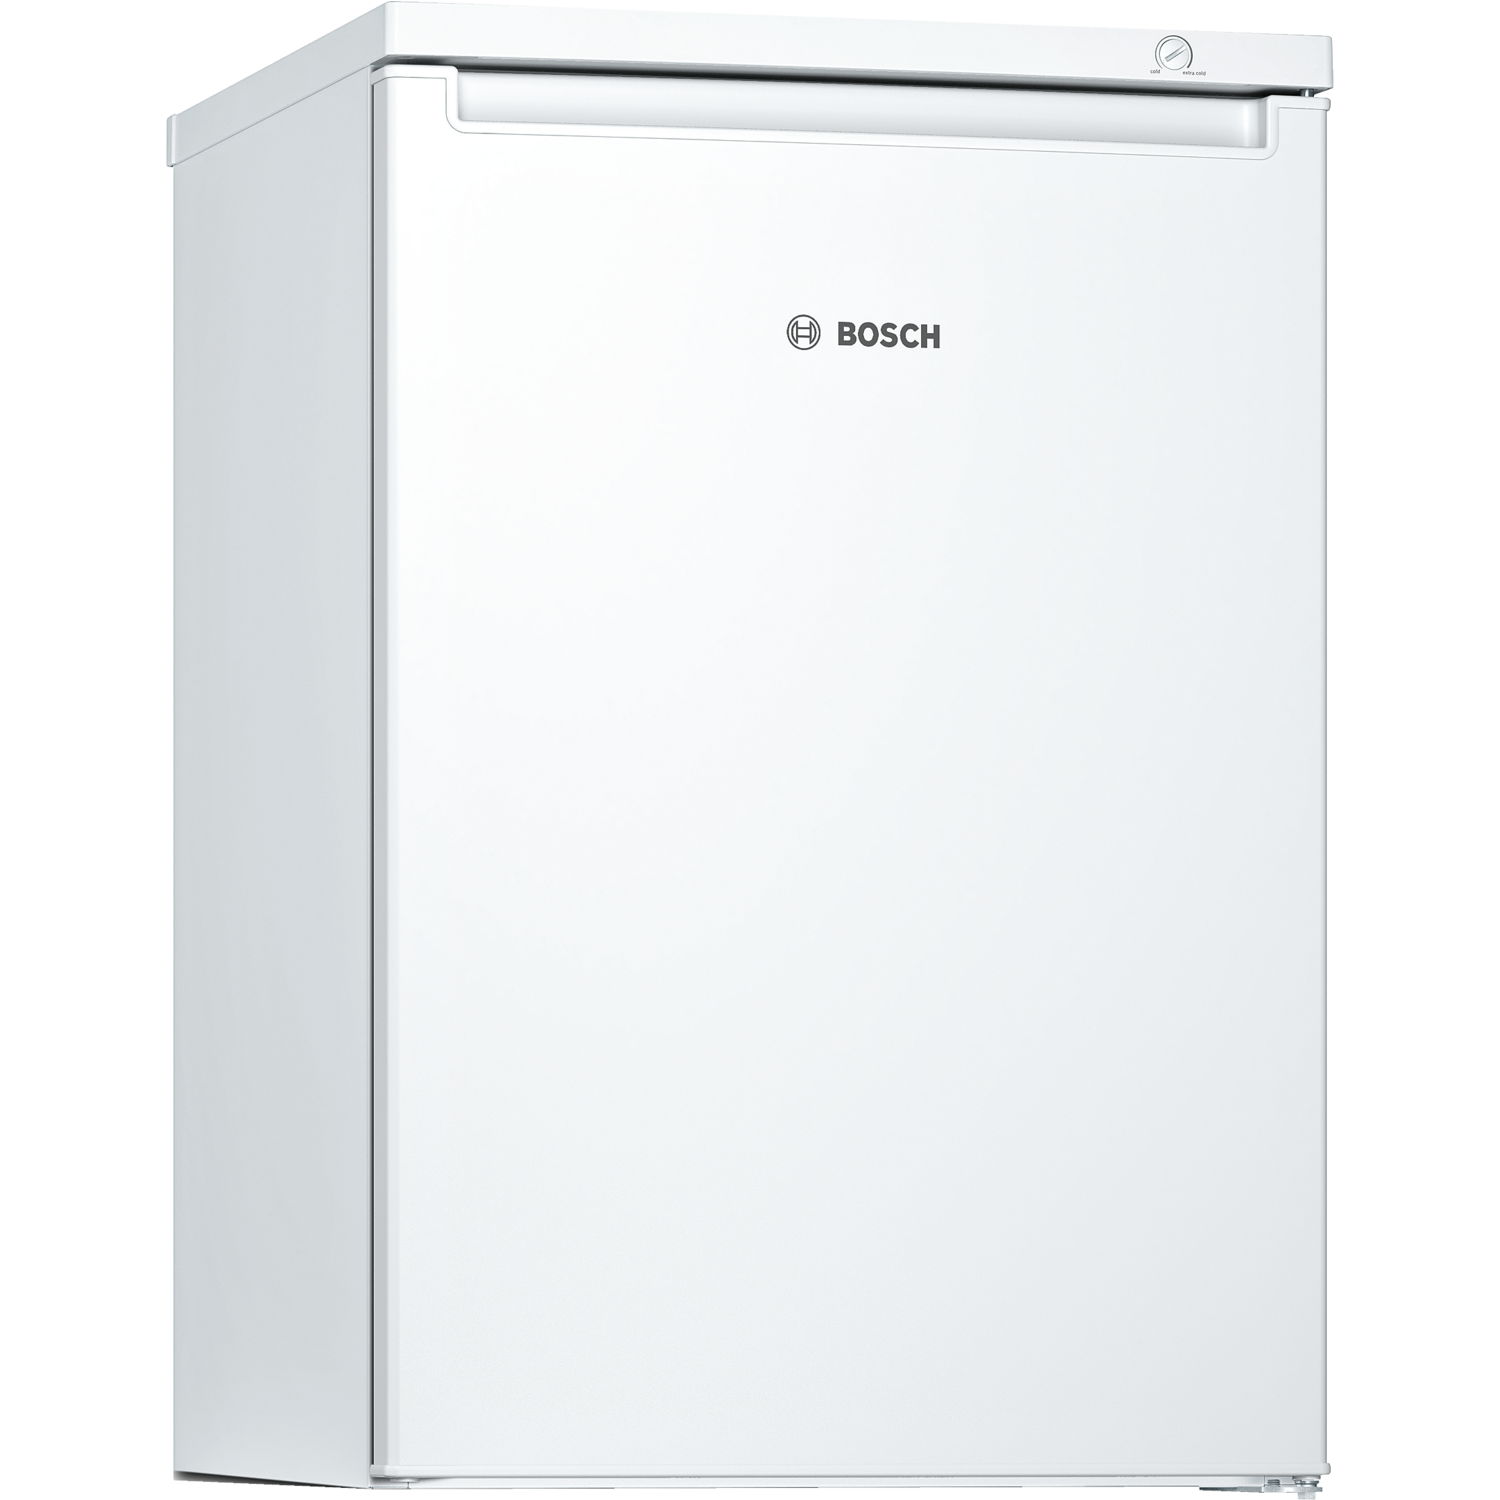 Bosch 82 Litre Freestanding Freezer - White